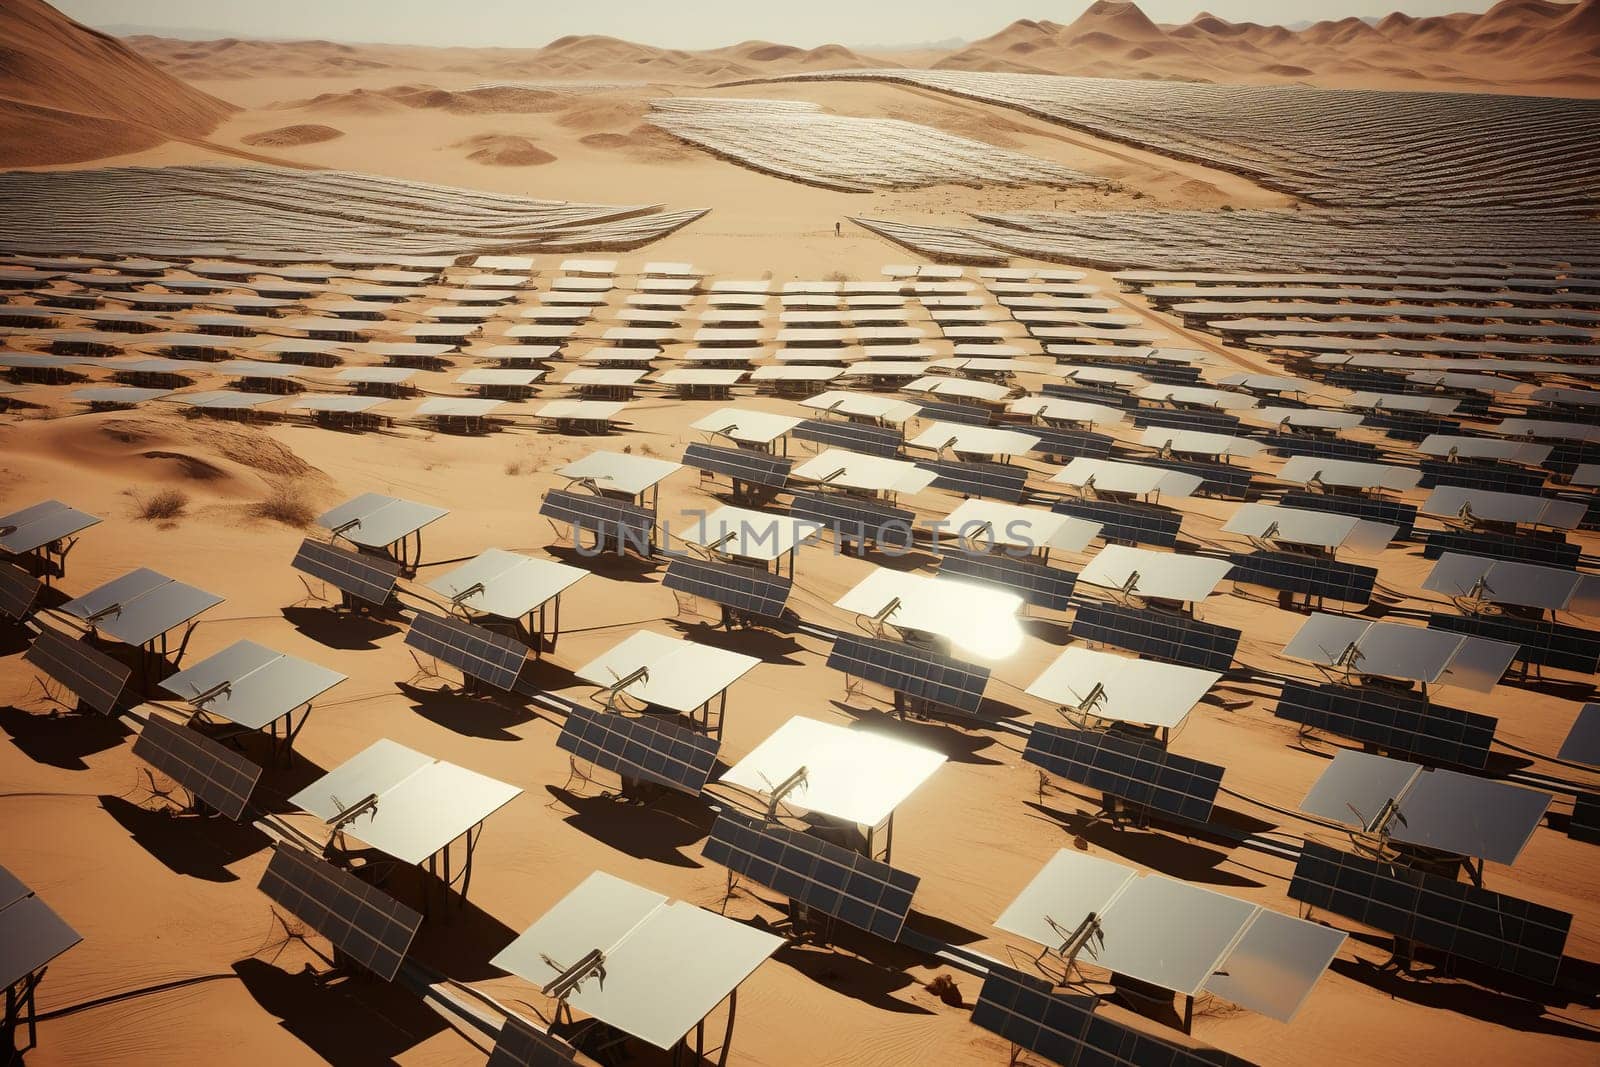 A large park of solar panels on a deserted sandy area. Solar energy concept.